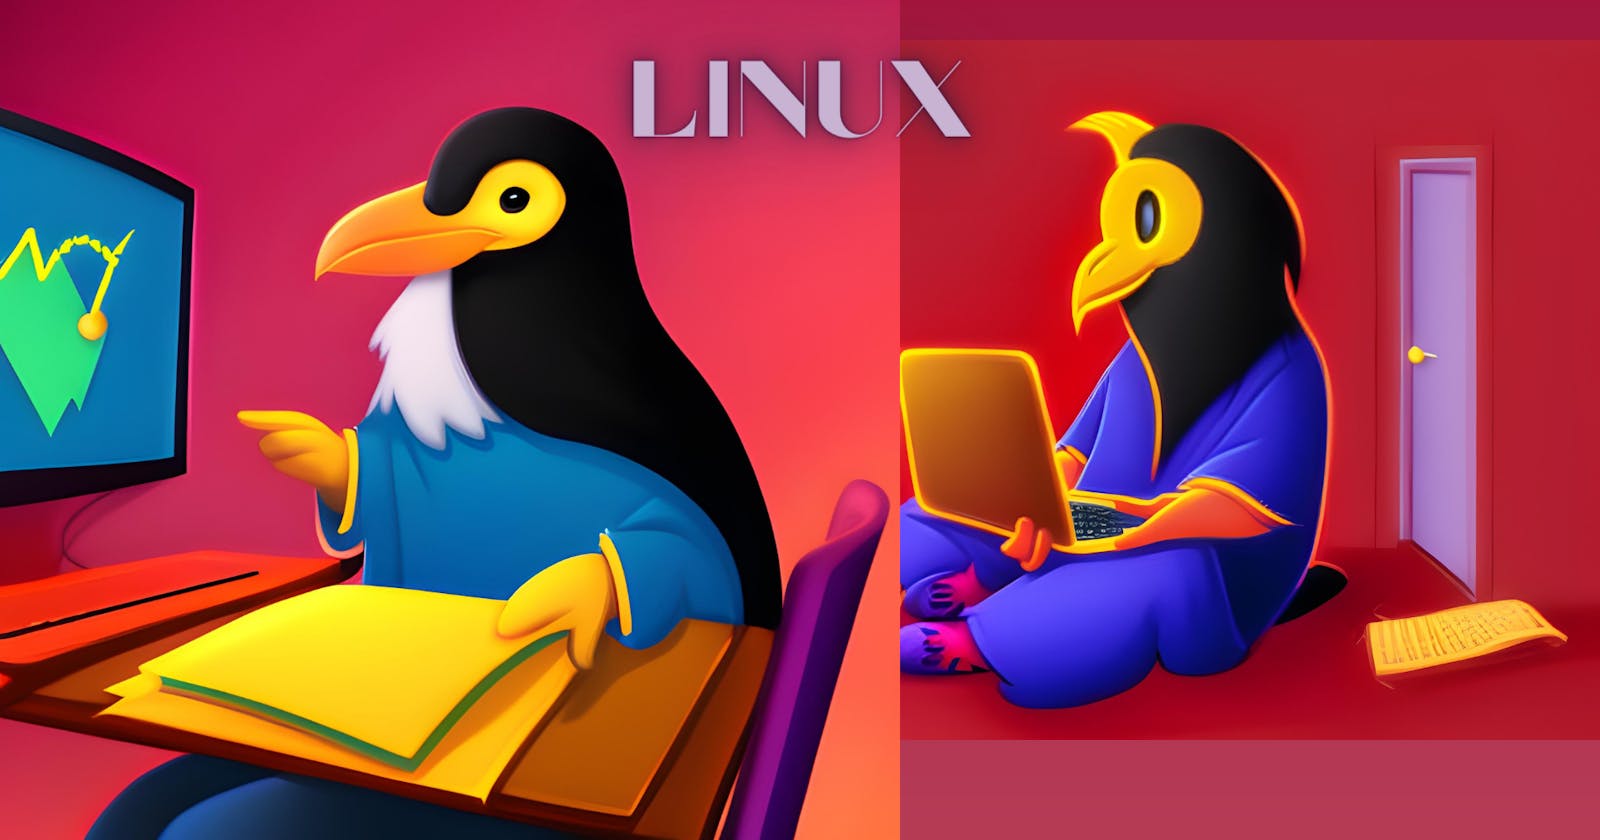 Fundamentals of Linux